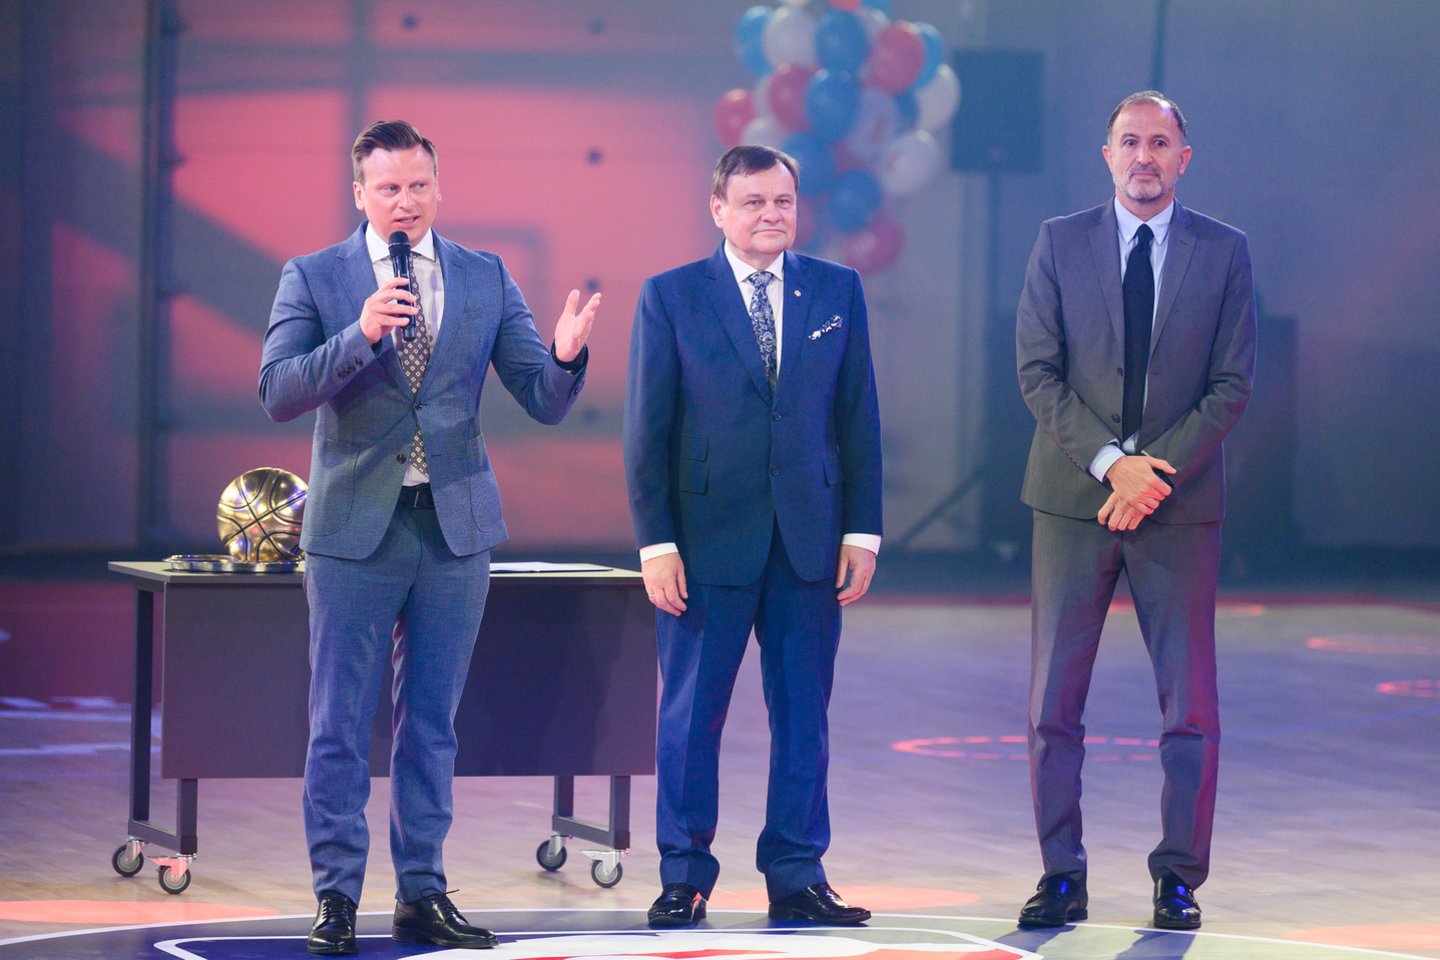 Vilniuje atidaryta NBA mokykla.<br>V.Skaraičio nuotr.